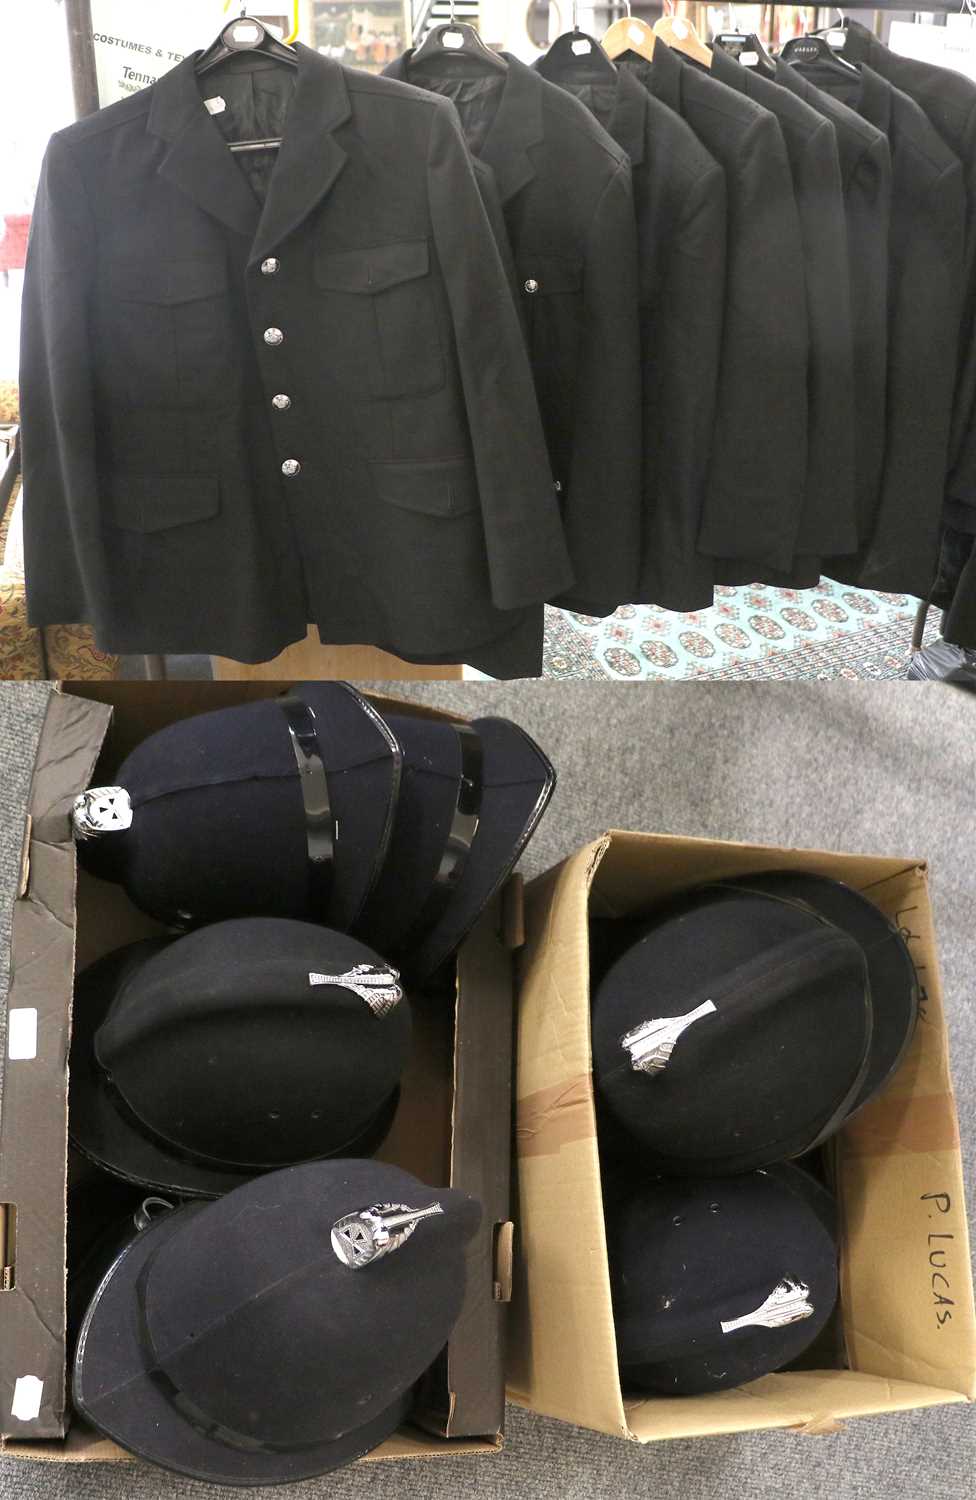 Eleven Elizabeth II British Police Officer's Jackets, with chrome buttons; twelve Elizabeth II